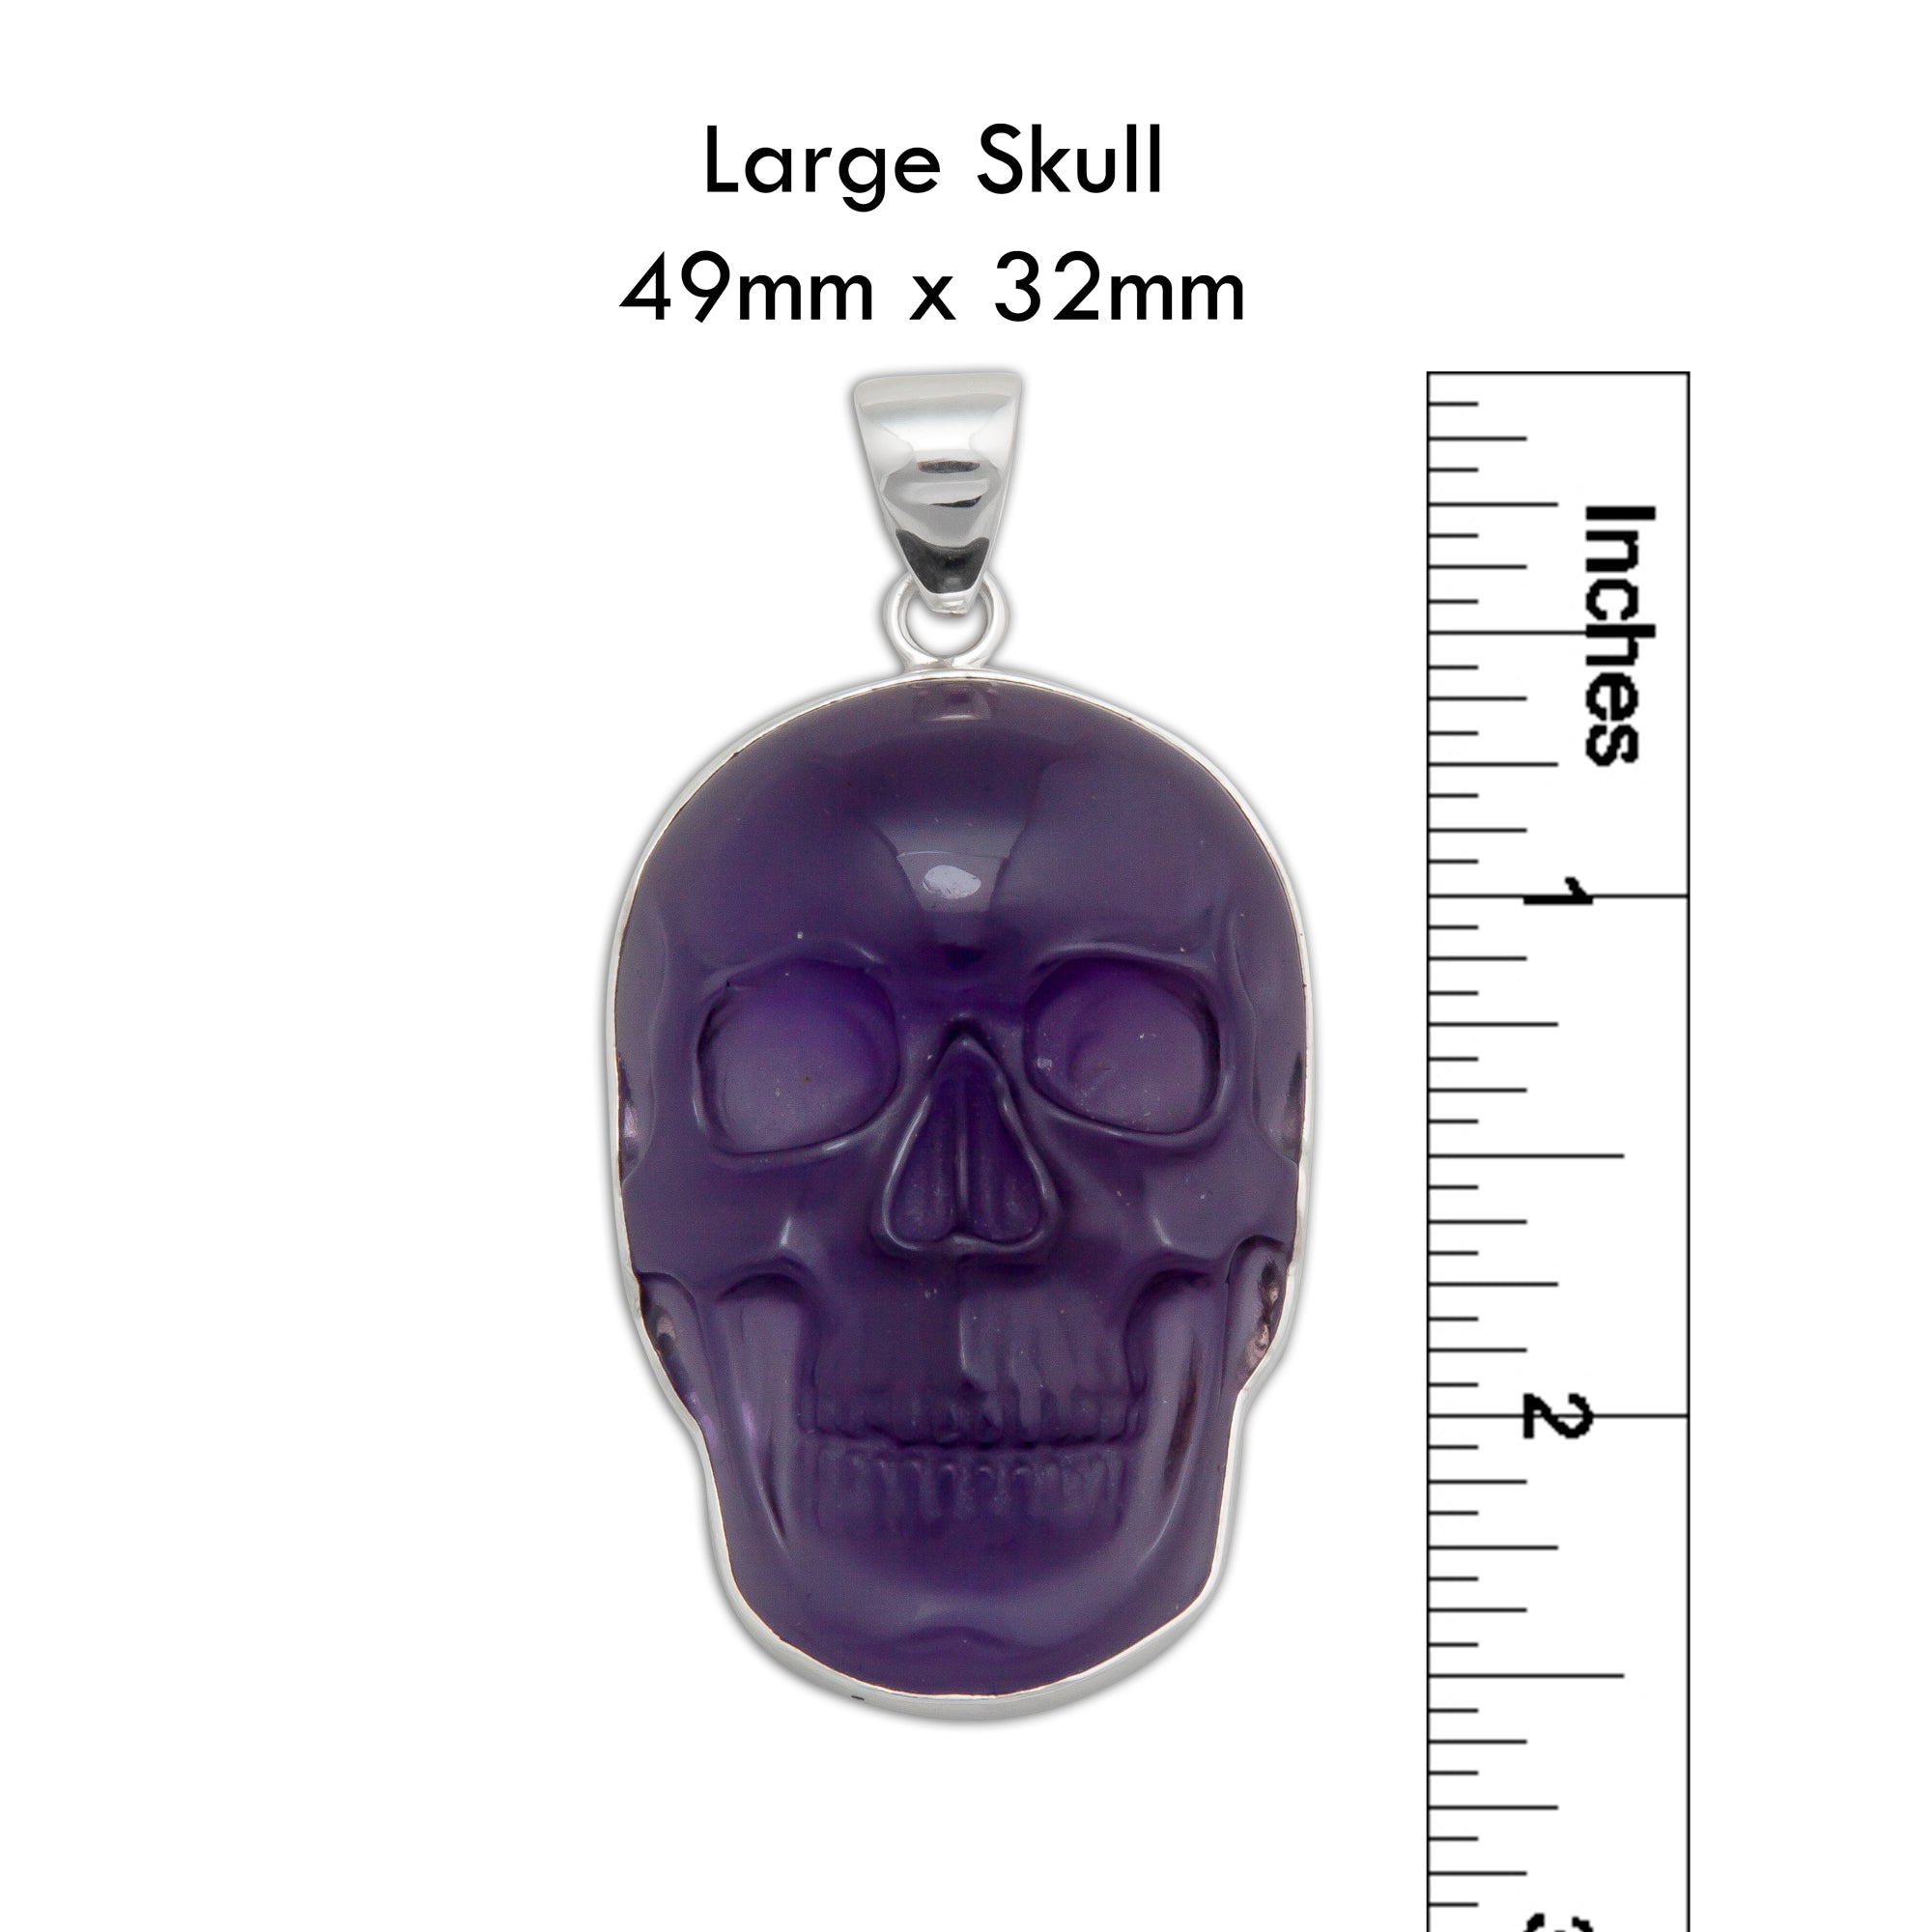 Sterling Silver Large Amethyst Skull Pendant | Charles Albert Jewelry